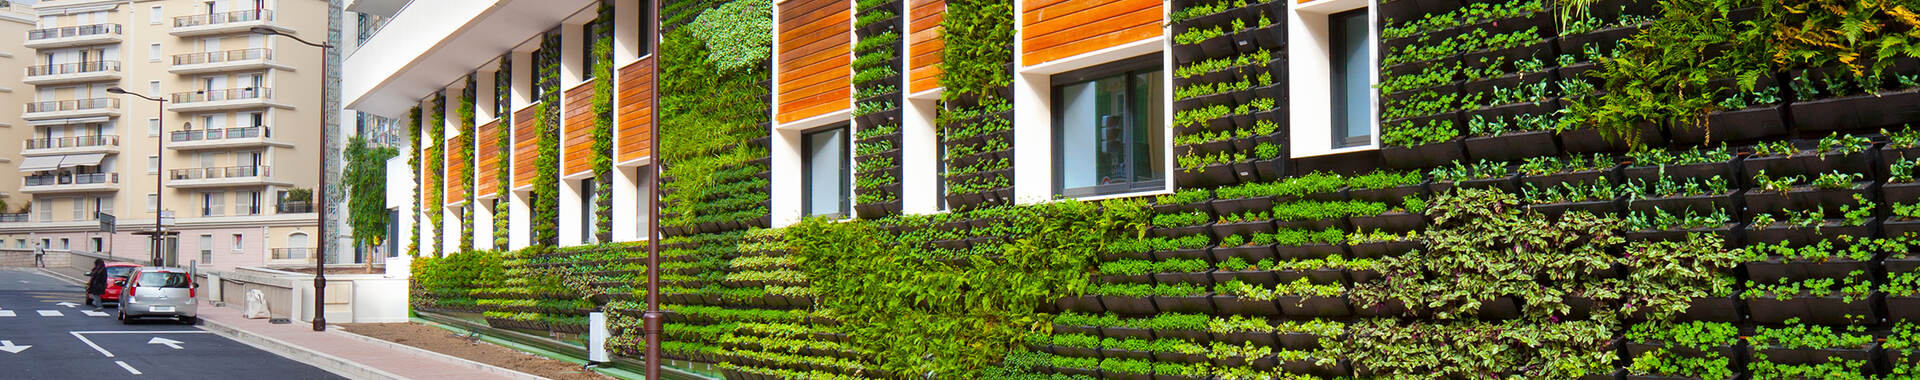 Building with garden vertical garden growing on wall